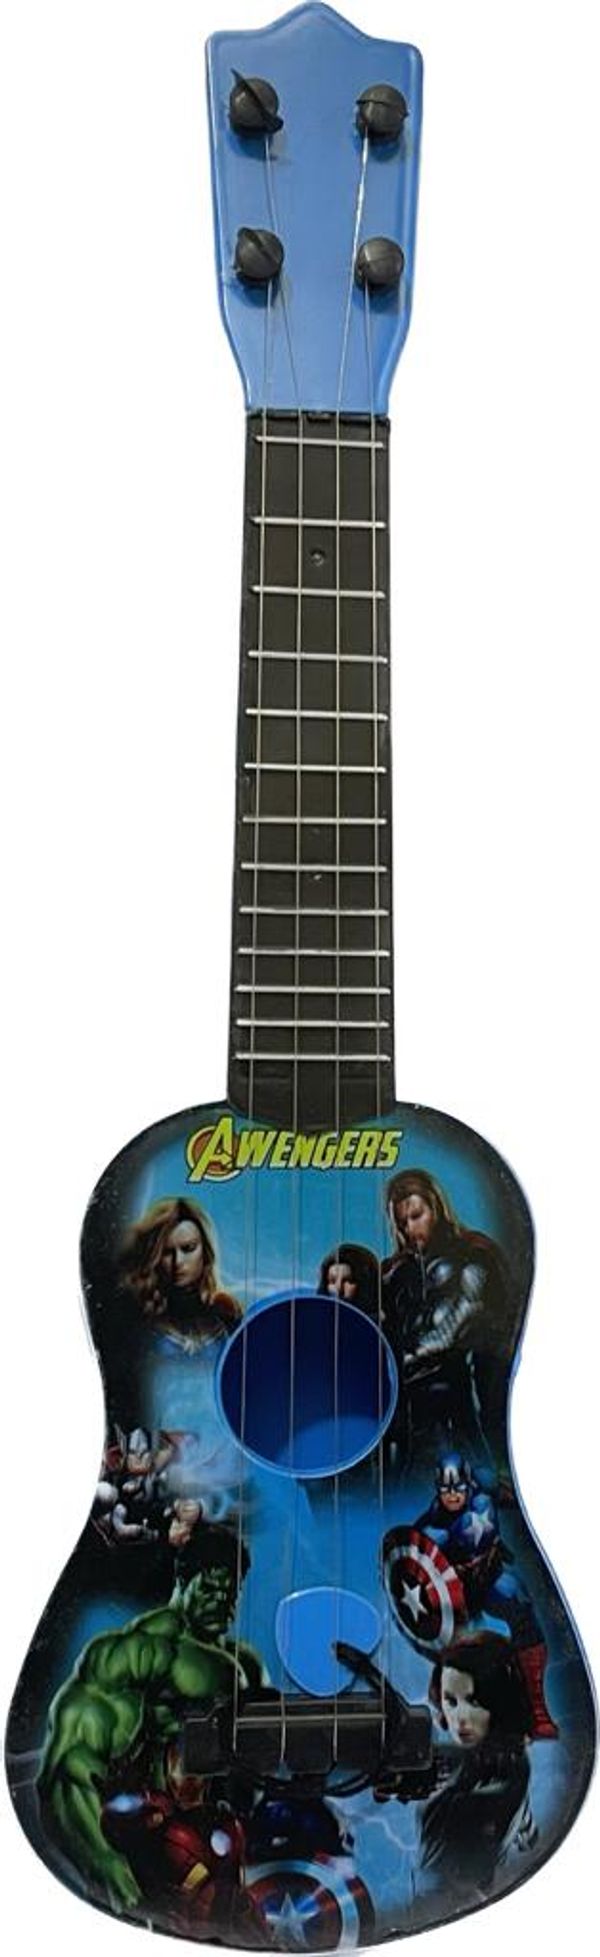 Avengers Guitar 12701 - SKU294CODE